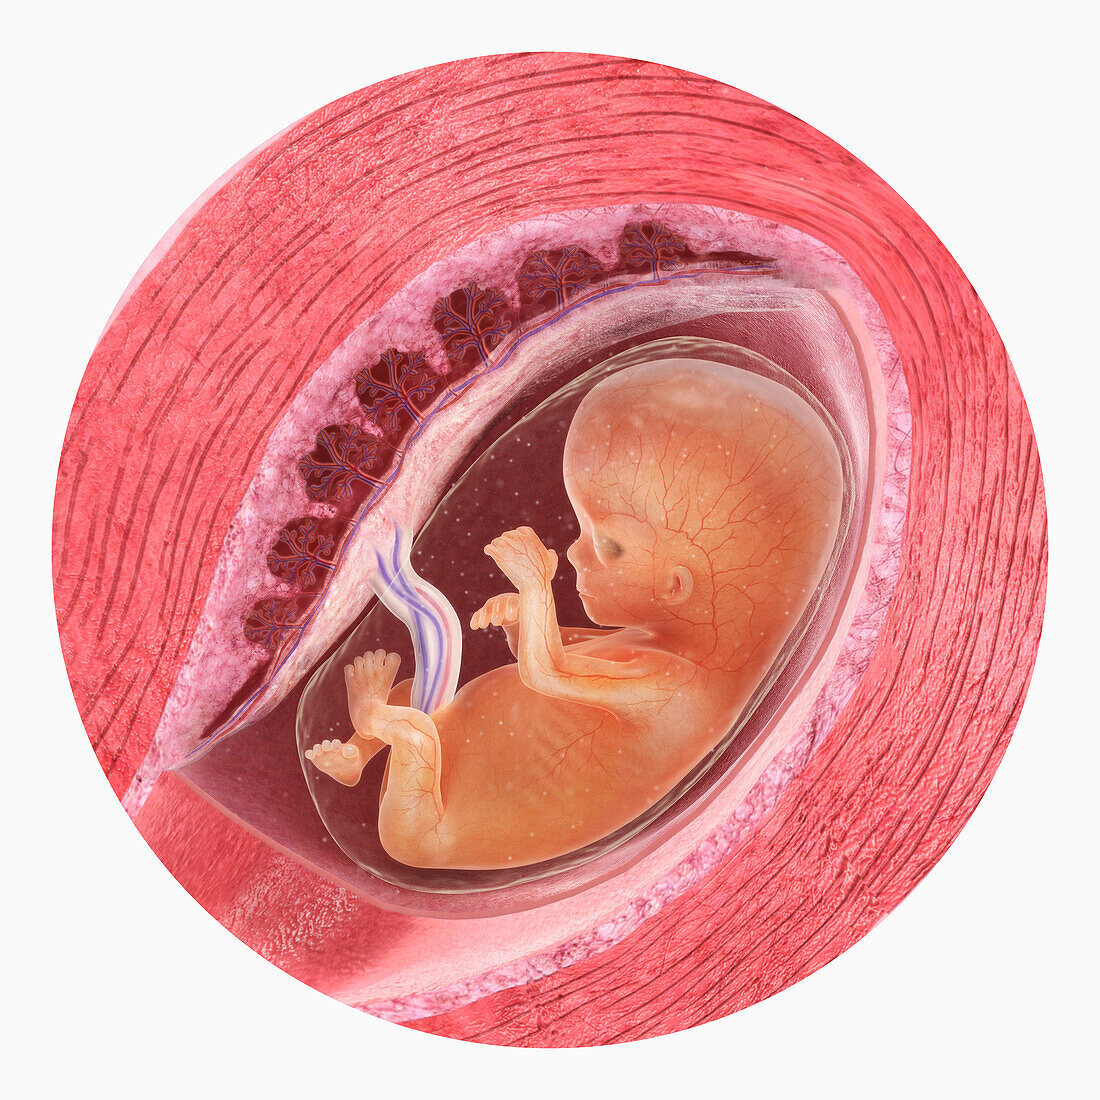 Embryo at 12 weeks, illustration